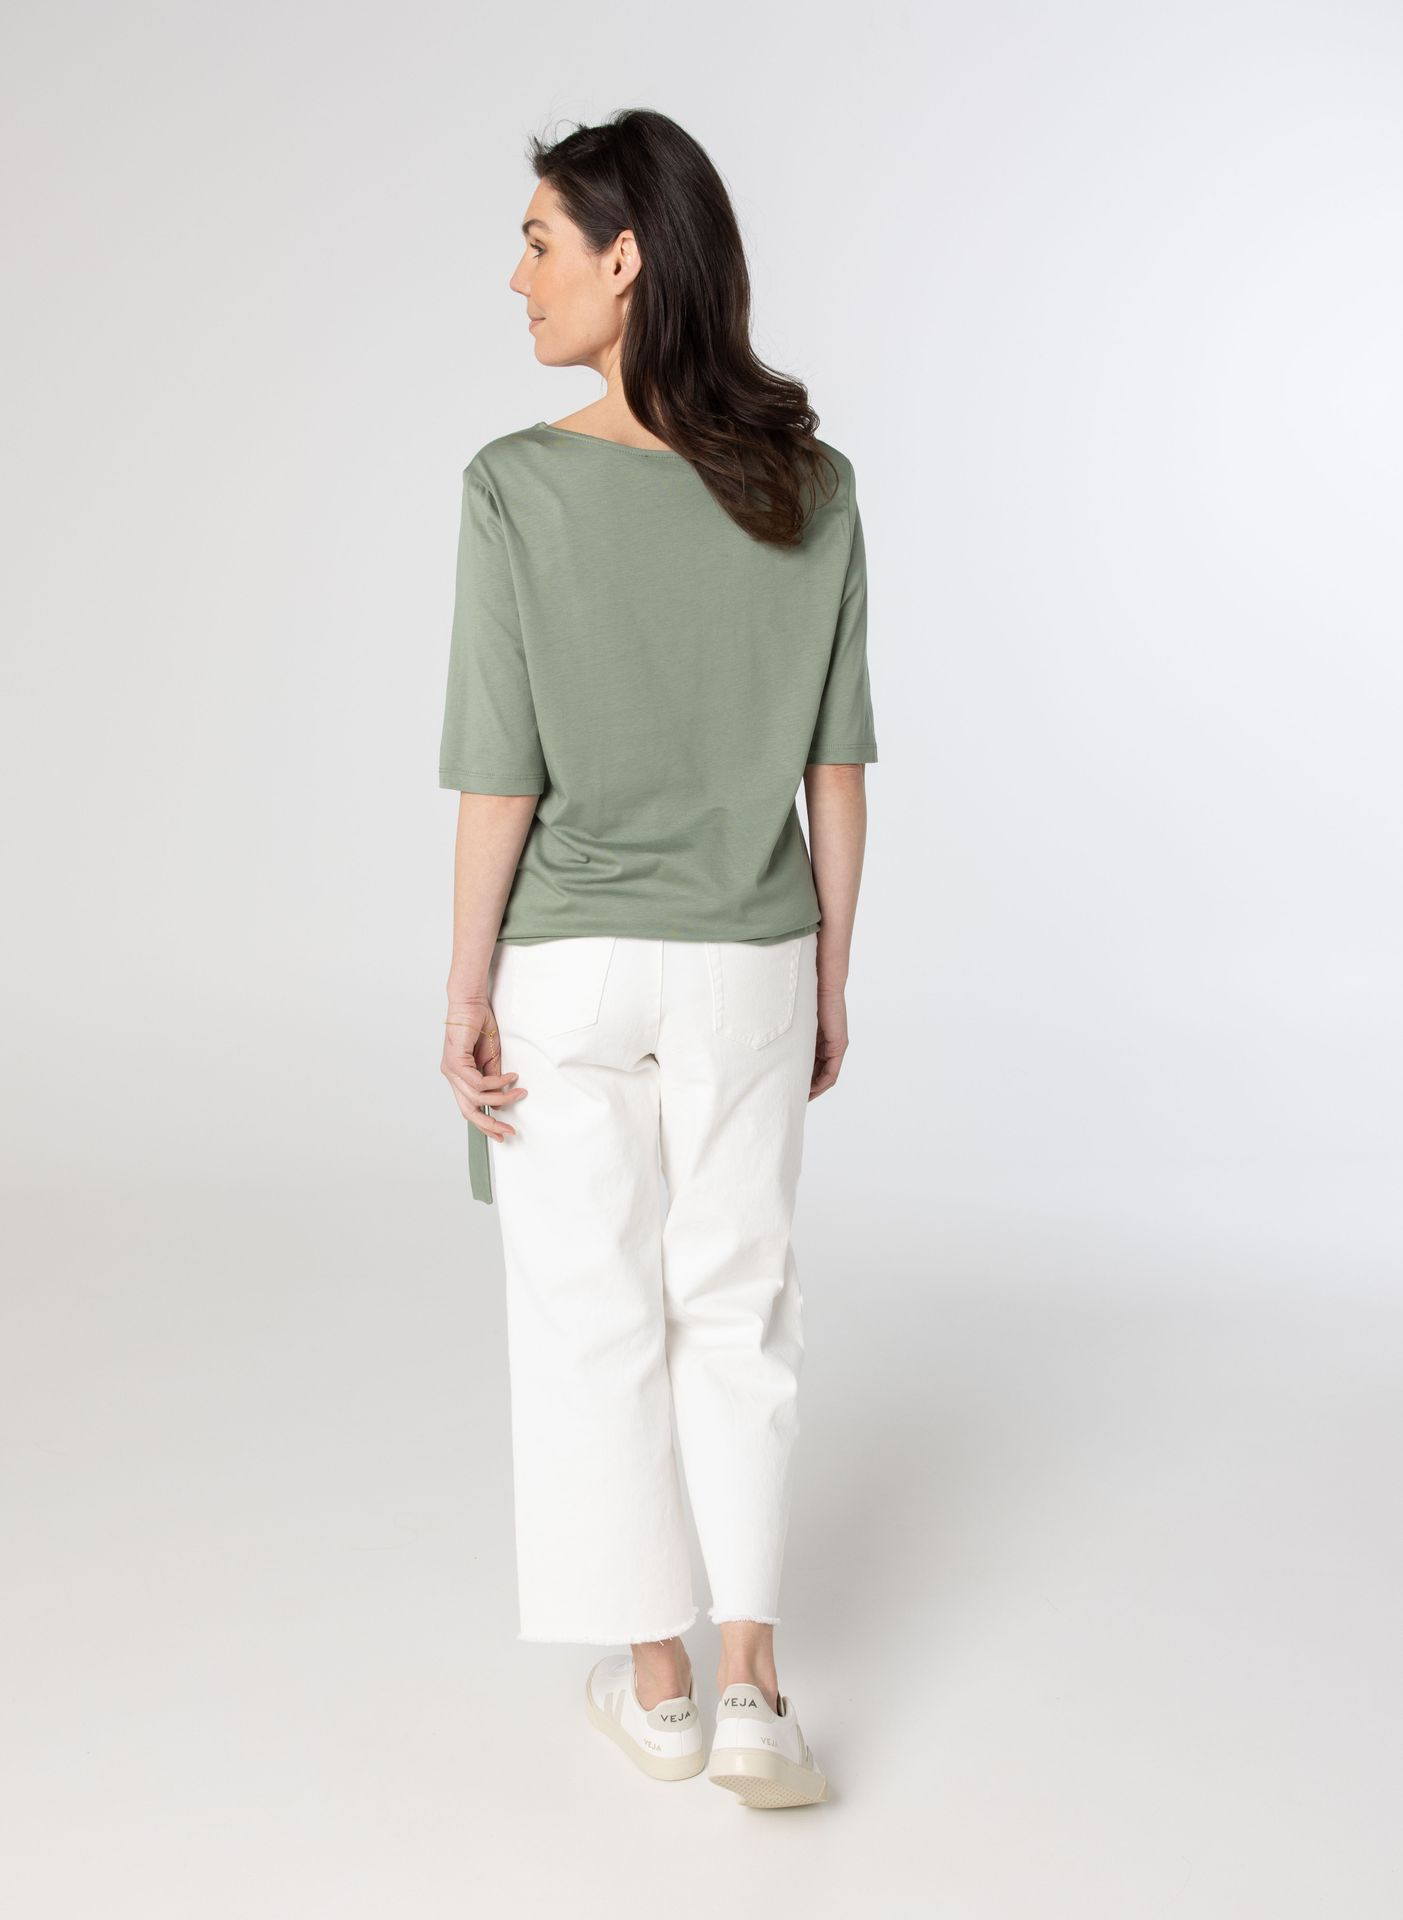 Norah Groen shirt met strik green/grey 209993-540